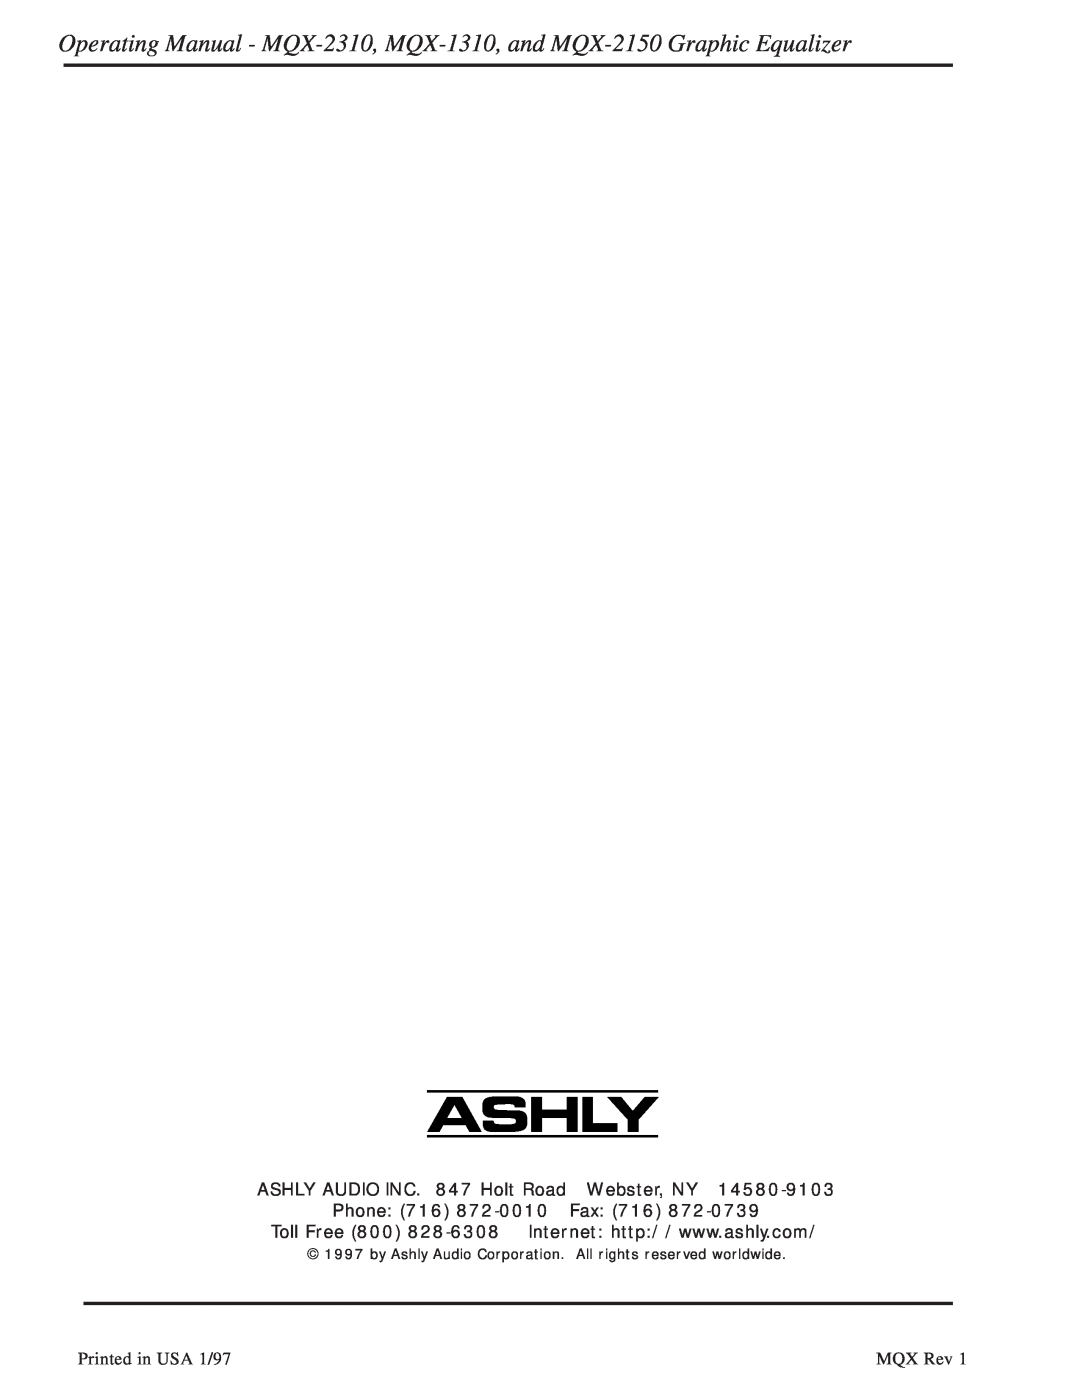 Ashly MQX-2310 manual ASHLY AUDIO INC. 847 Holt Road Webster, NY, Phone 716 872-0010Fax, MQX Rev 